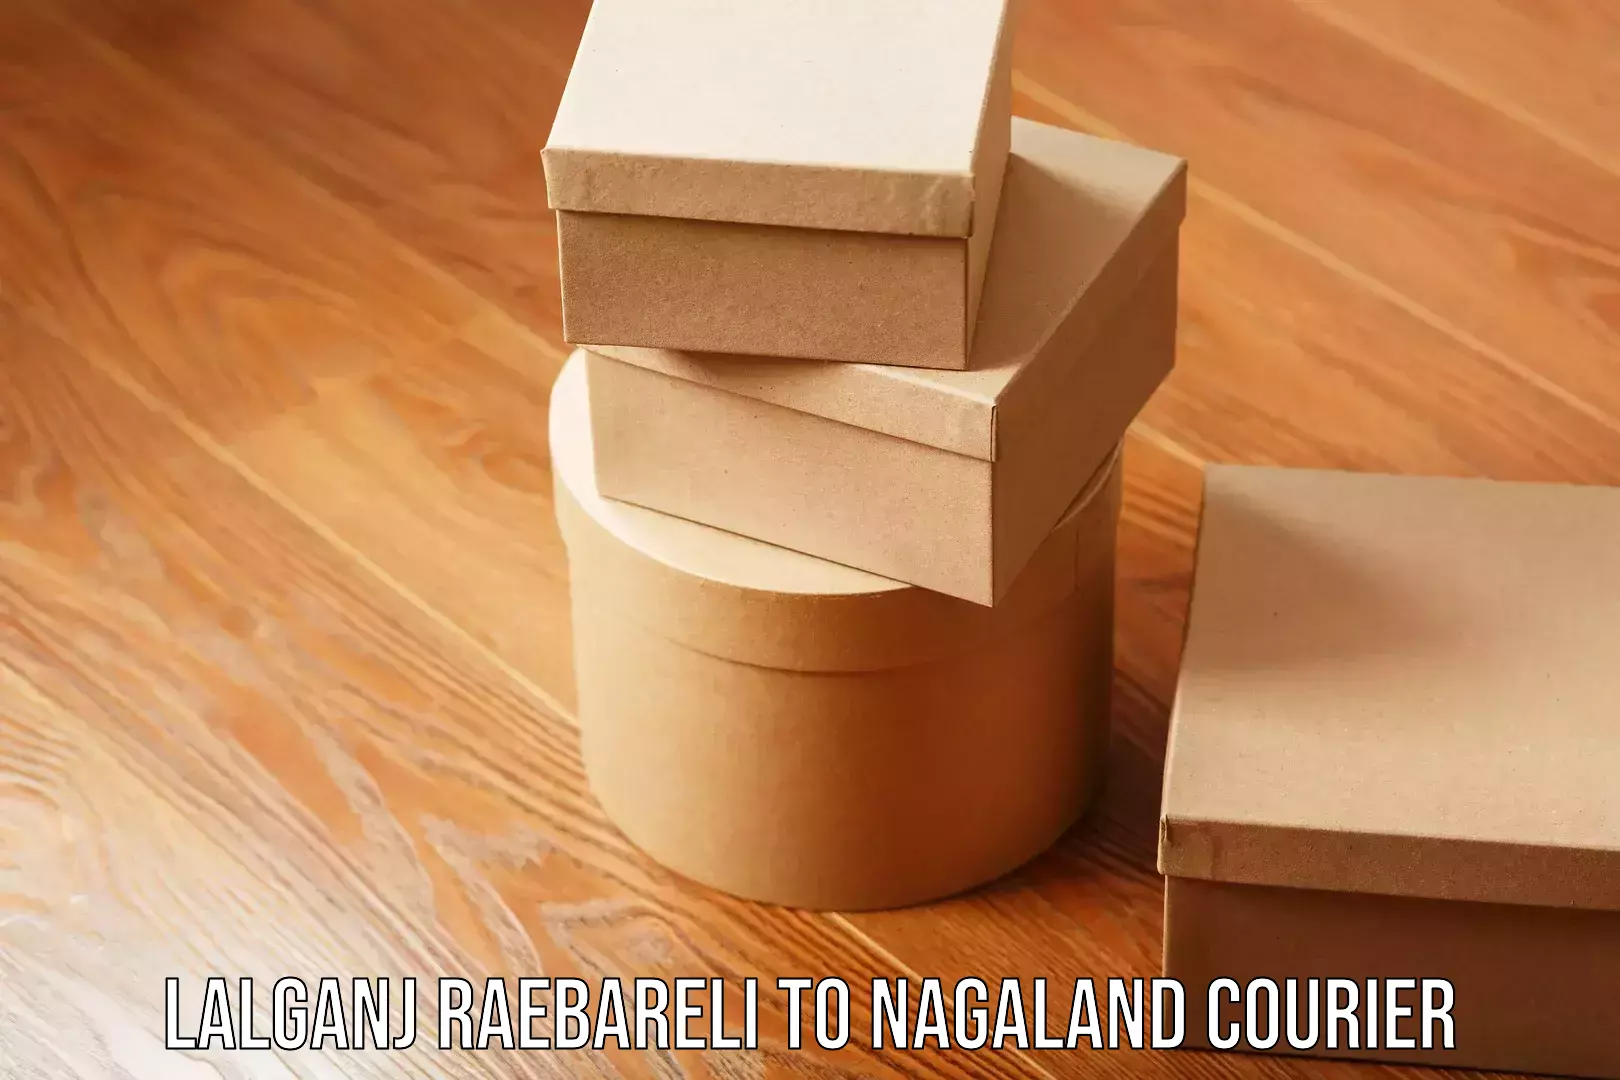 Trusted relocation experts Lalganj Raebareli to Nagaland